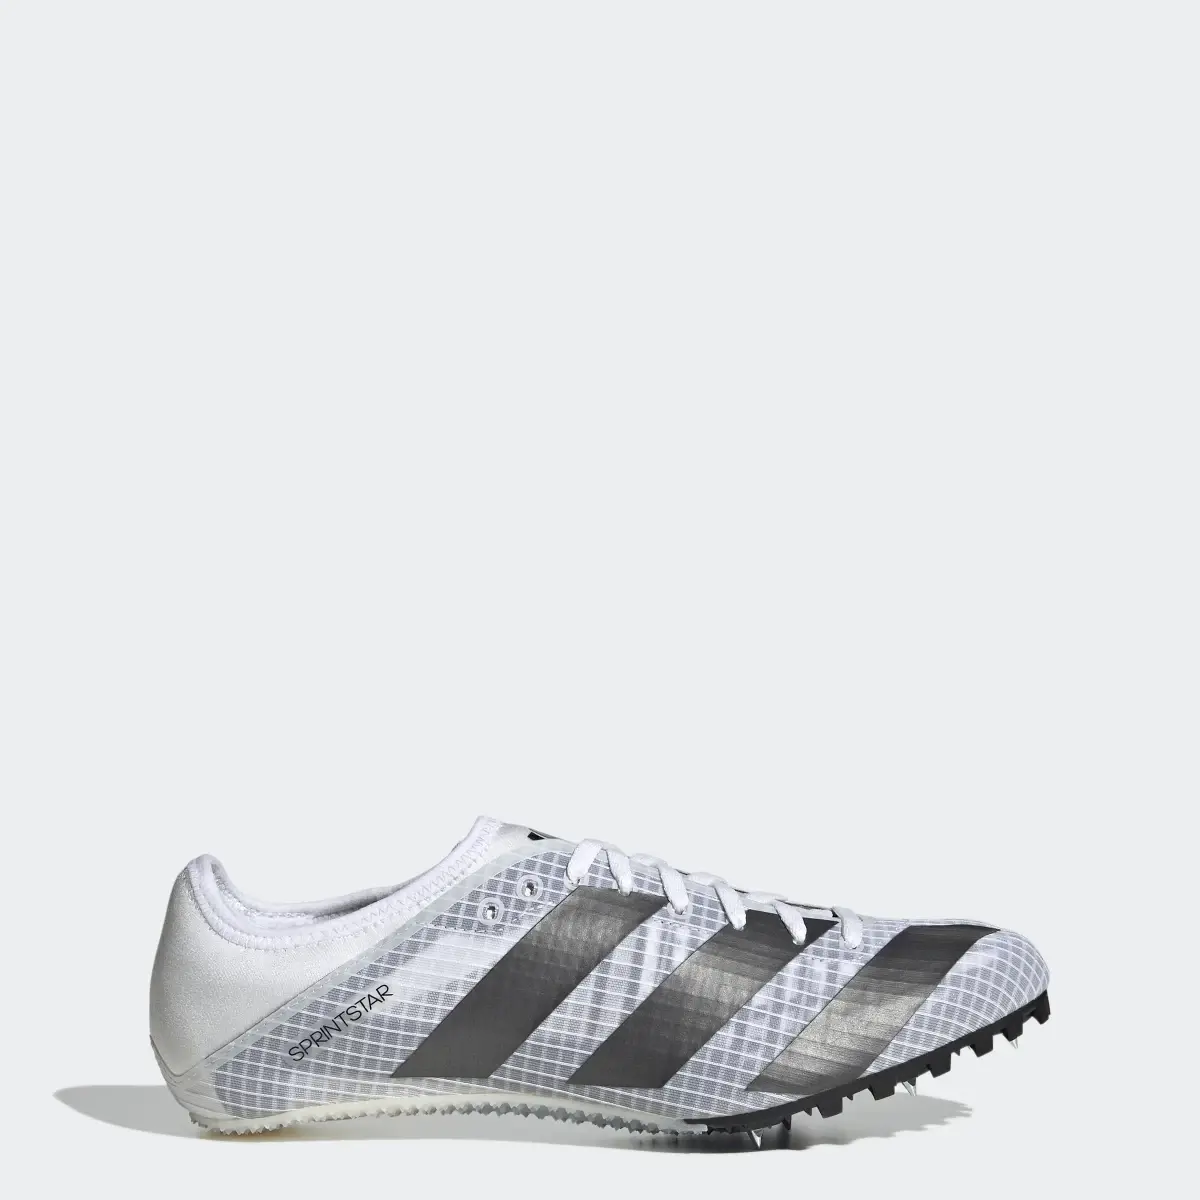 Adidas Sprintstar Shoes. 1